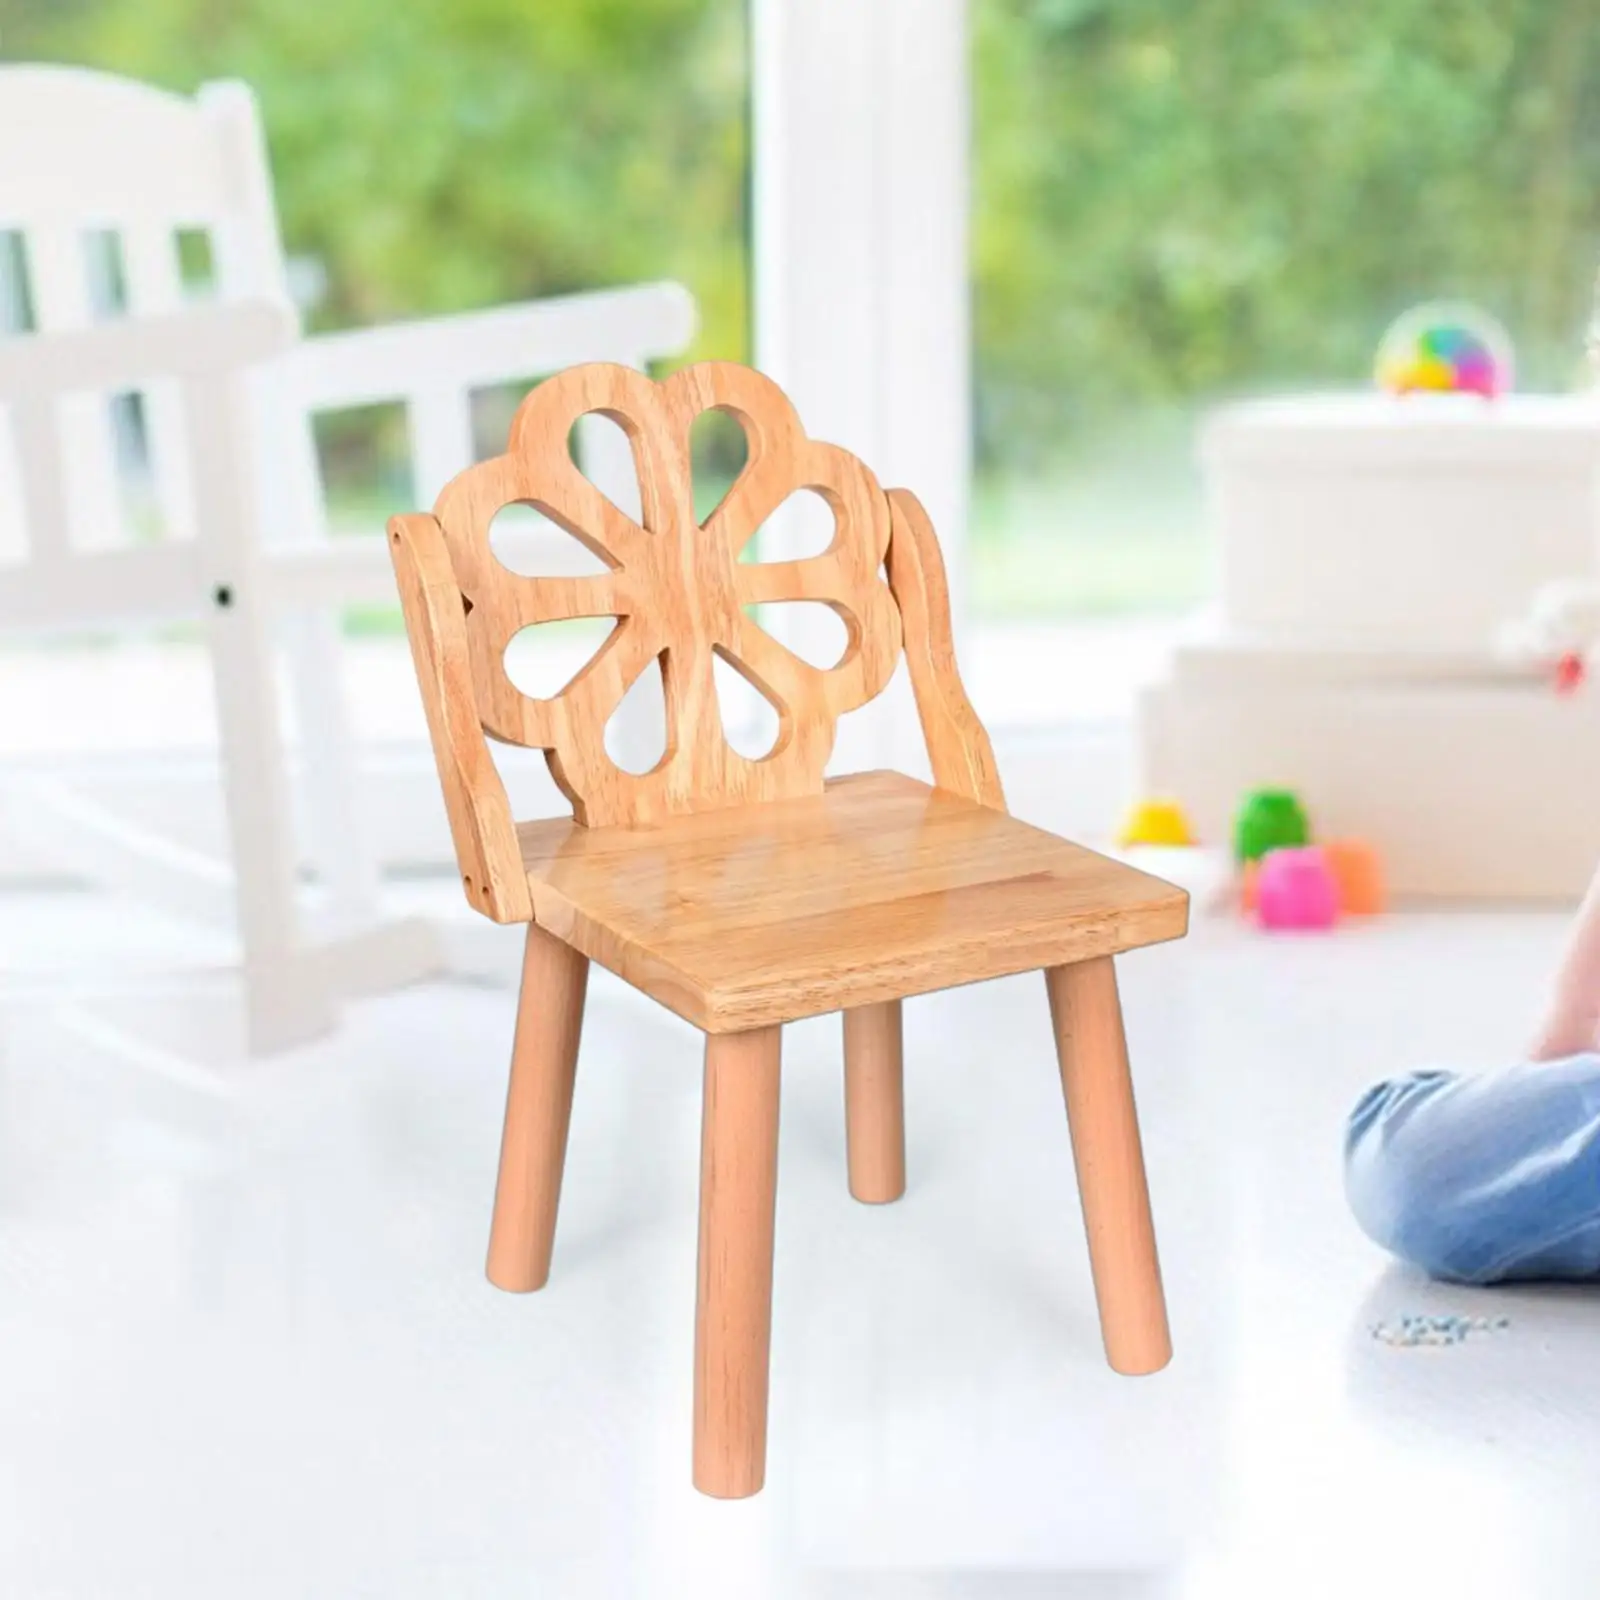 Wooden Removable Wooden Child Stool Anti Slip Lightweight Durable Wooden Kindergarten game for Nursery School Bedside Home